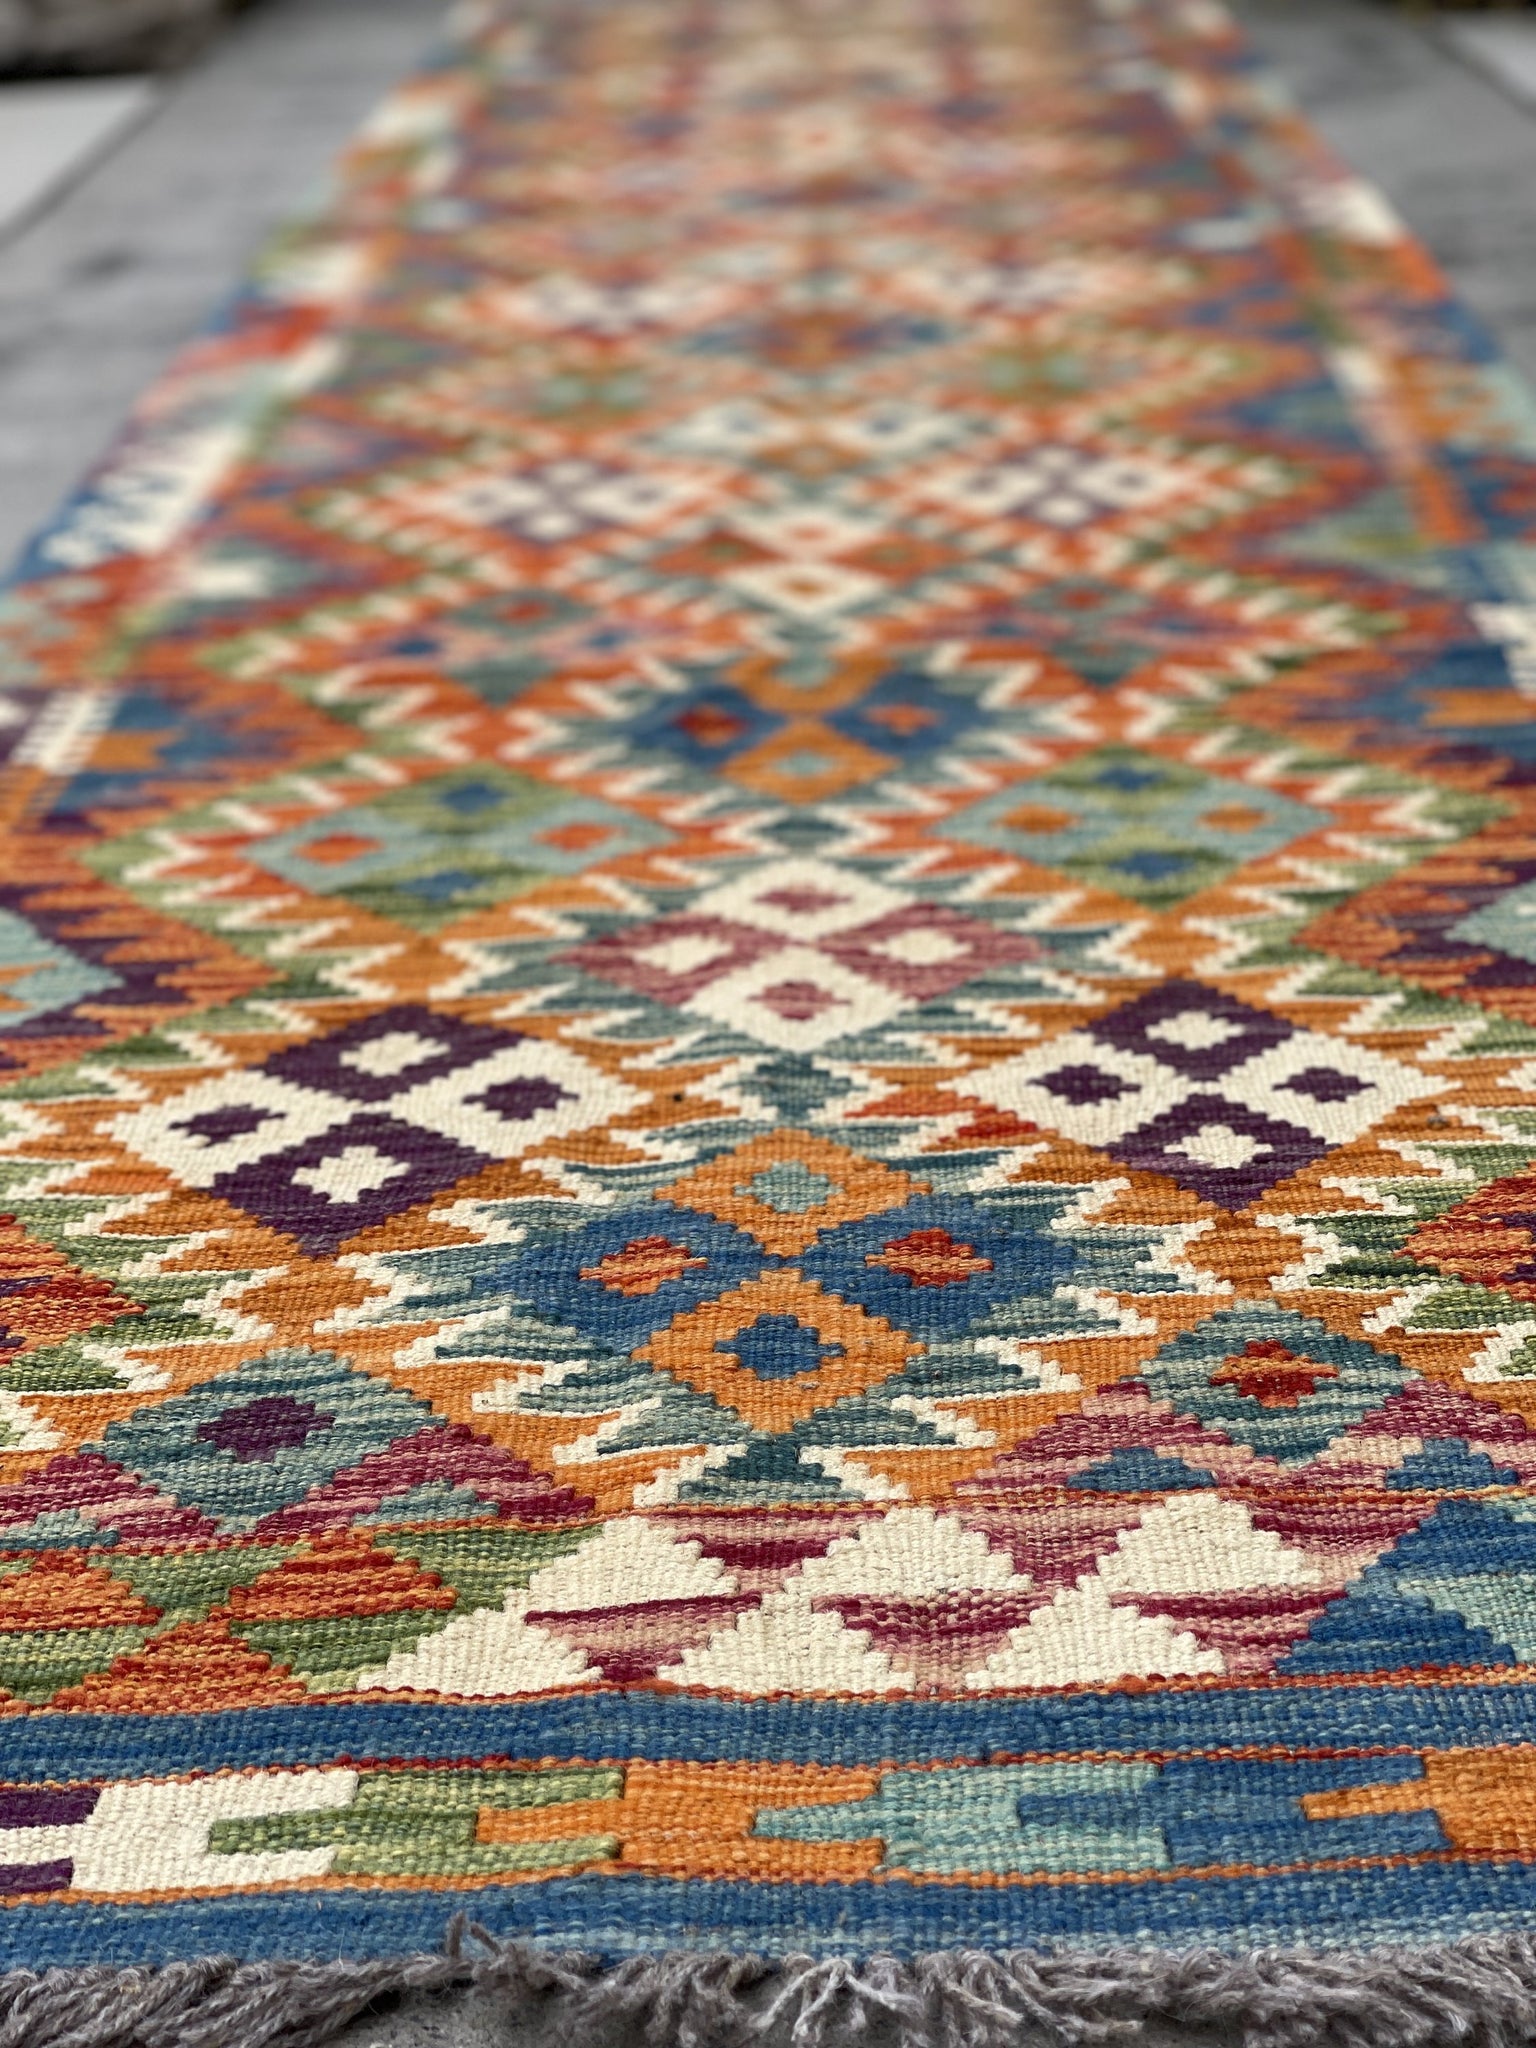 3x13 (90x395) Handmade Afghan Kilim Rug Runner | Blue Orange Ivory Green Turquoise Purple | Flatweave Flat Weave Tribal Oriental Boho Wool